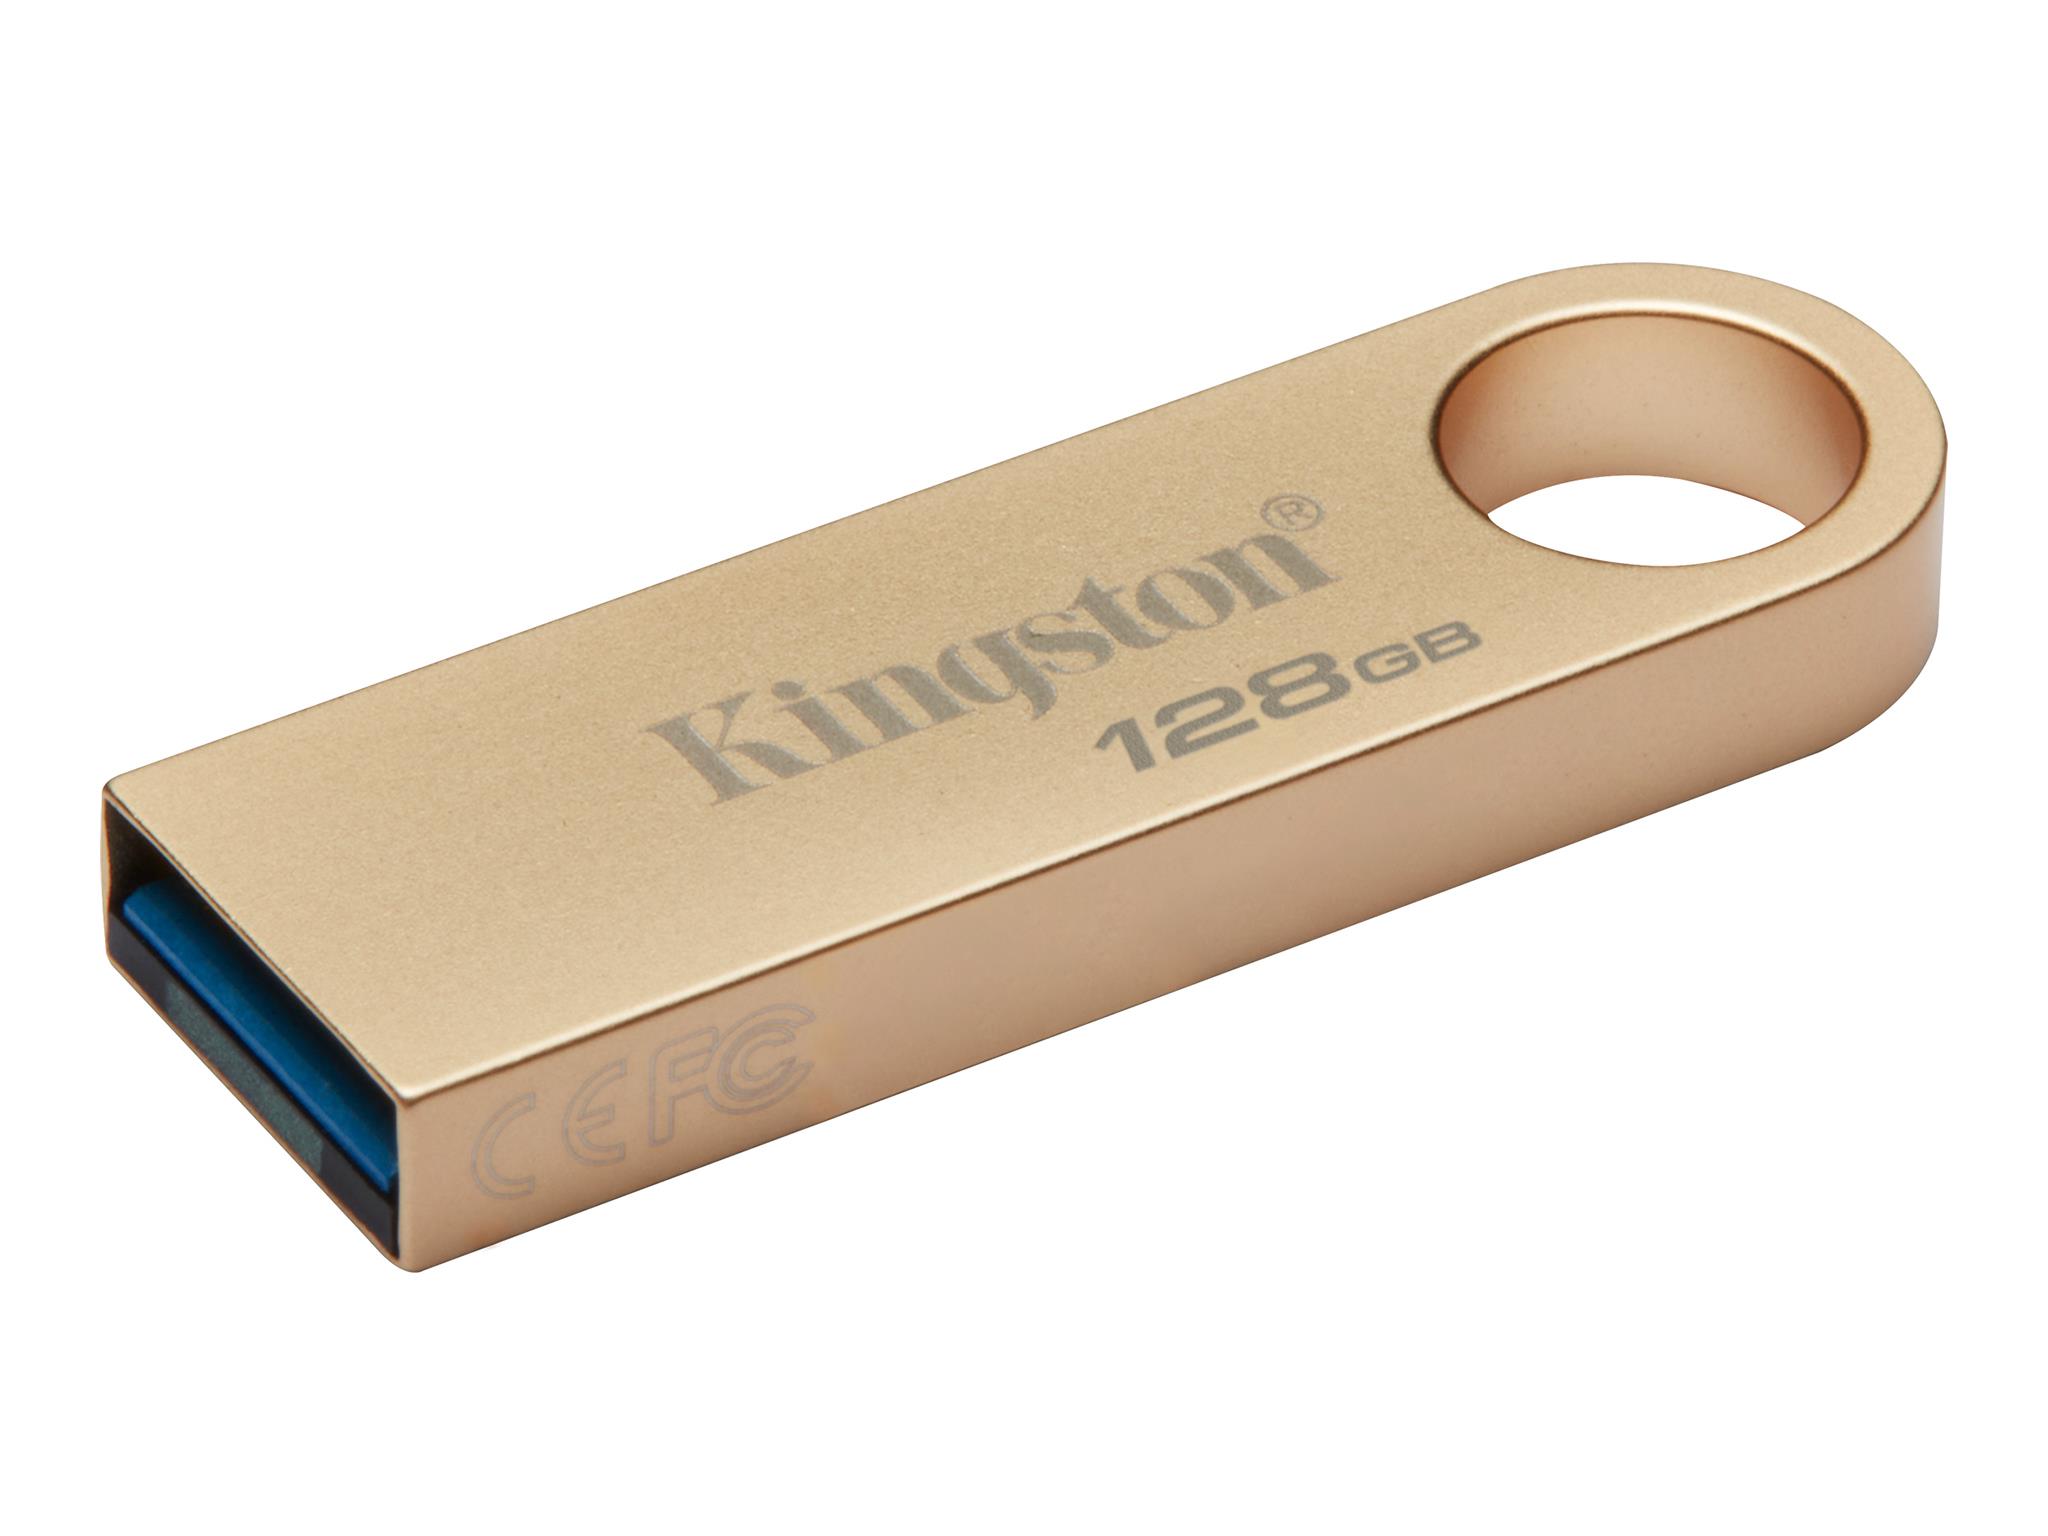 Kingston FD 128GB USB3.2 SE9 Premimum metal case,220MB/s read, 100 MB/s write,